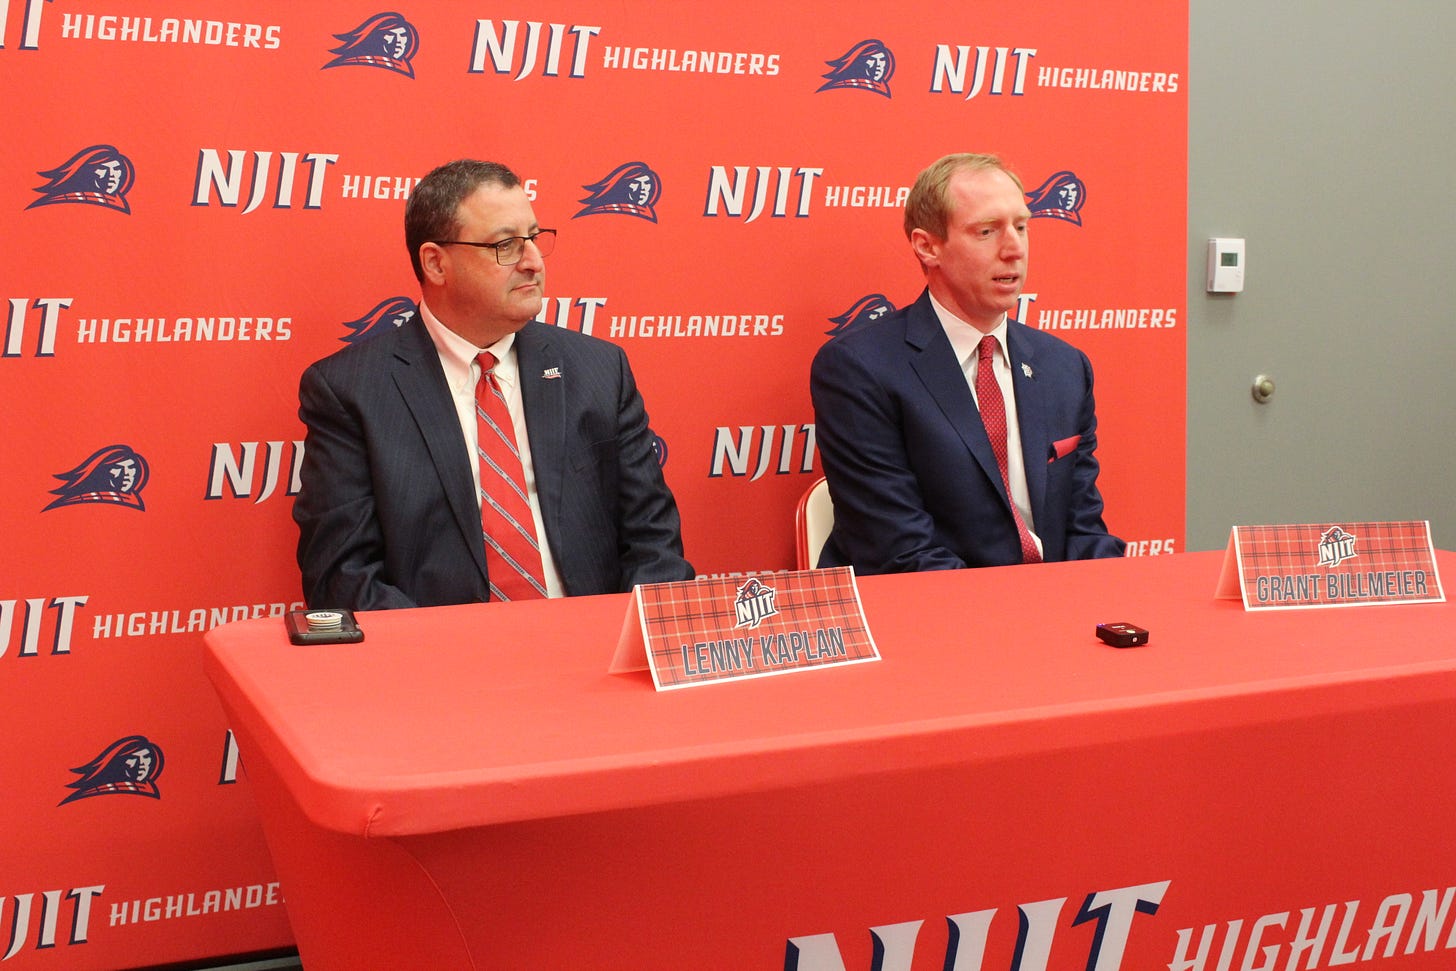 New coach Grant Billmeier (right) speaks to reporters alongside NJIT athletic director Lenny Kaplan on April 20, 2023. (Photo by Adam Zielonka)